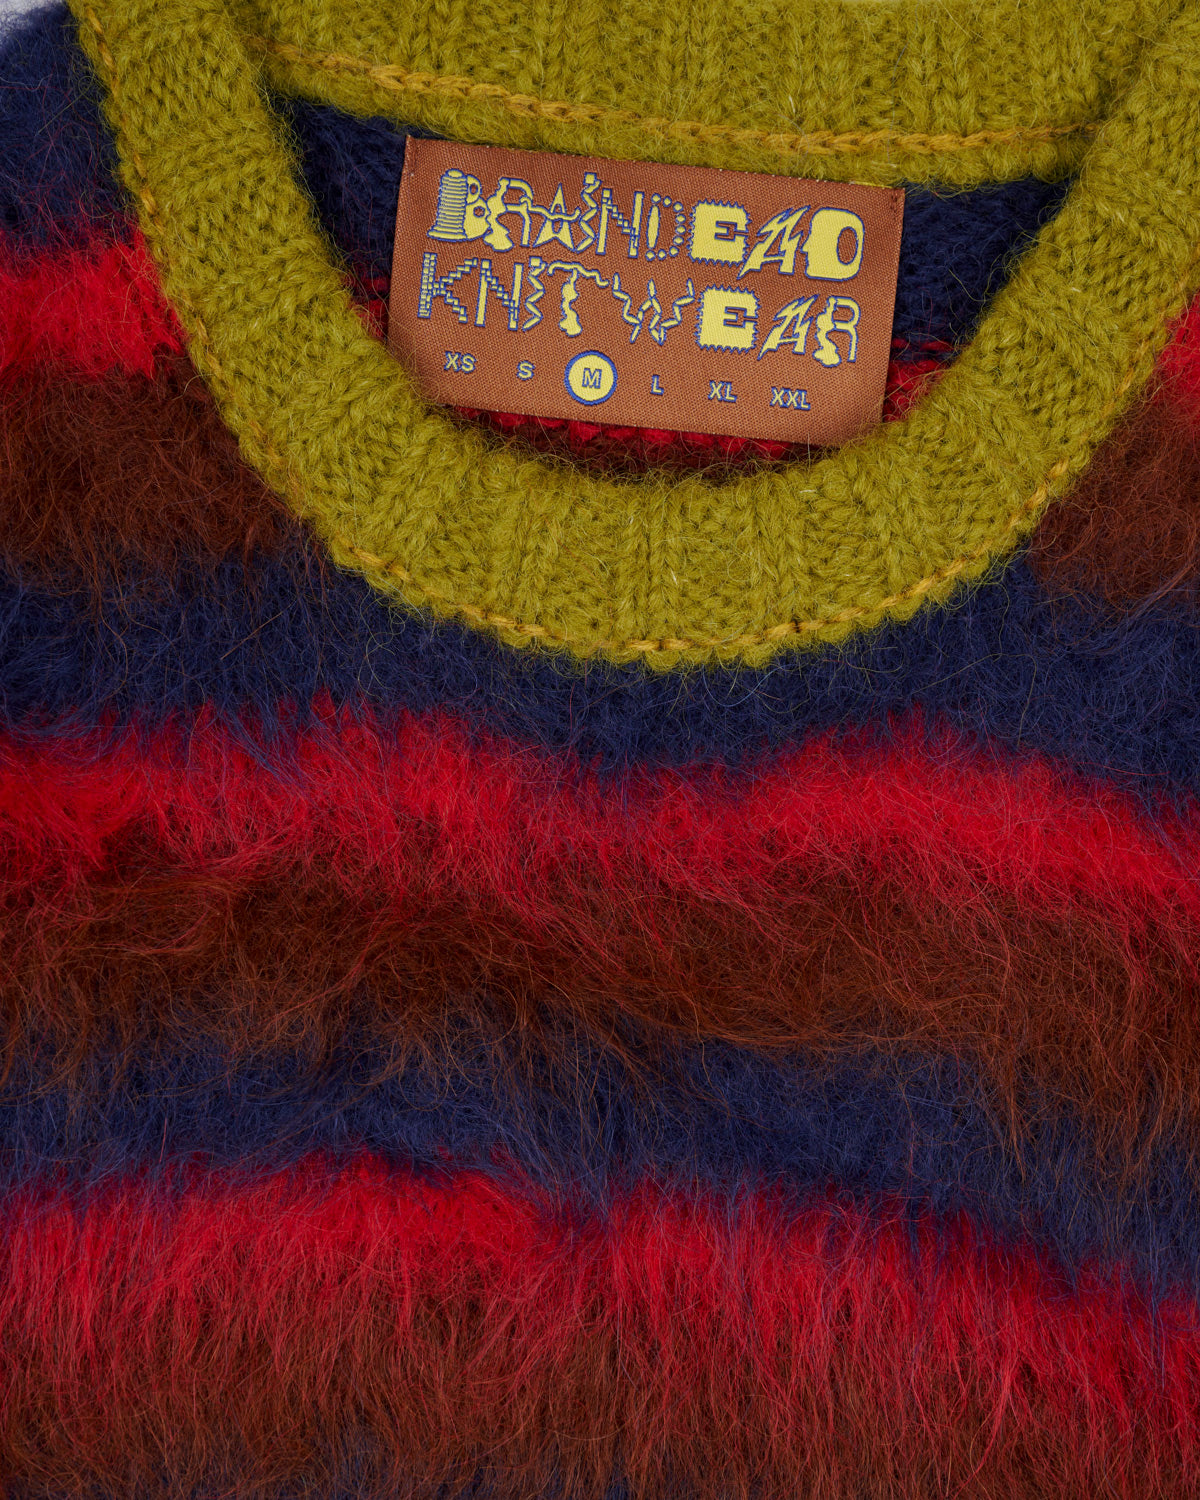 Stripe Boxy Knit Sweater - Brown Multi 3